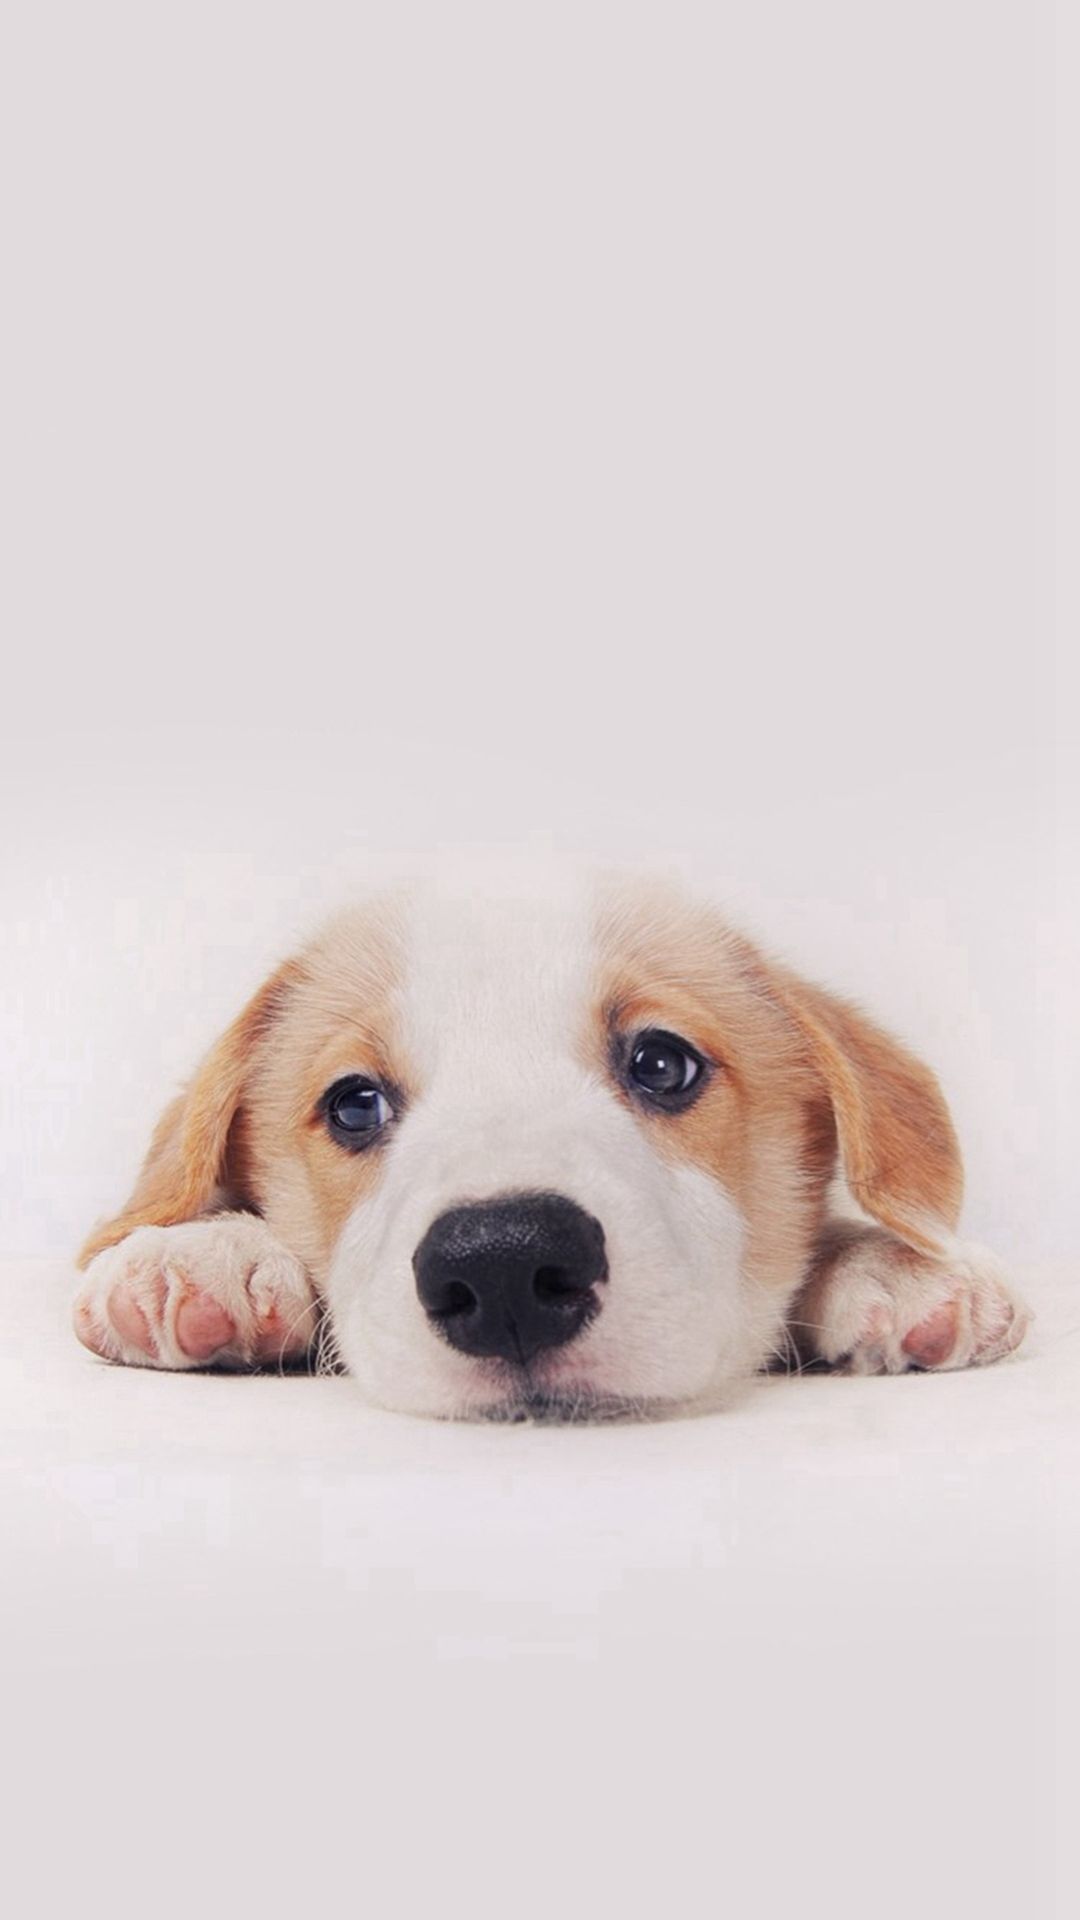 Cute Dog Wallpaper - NawPic